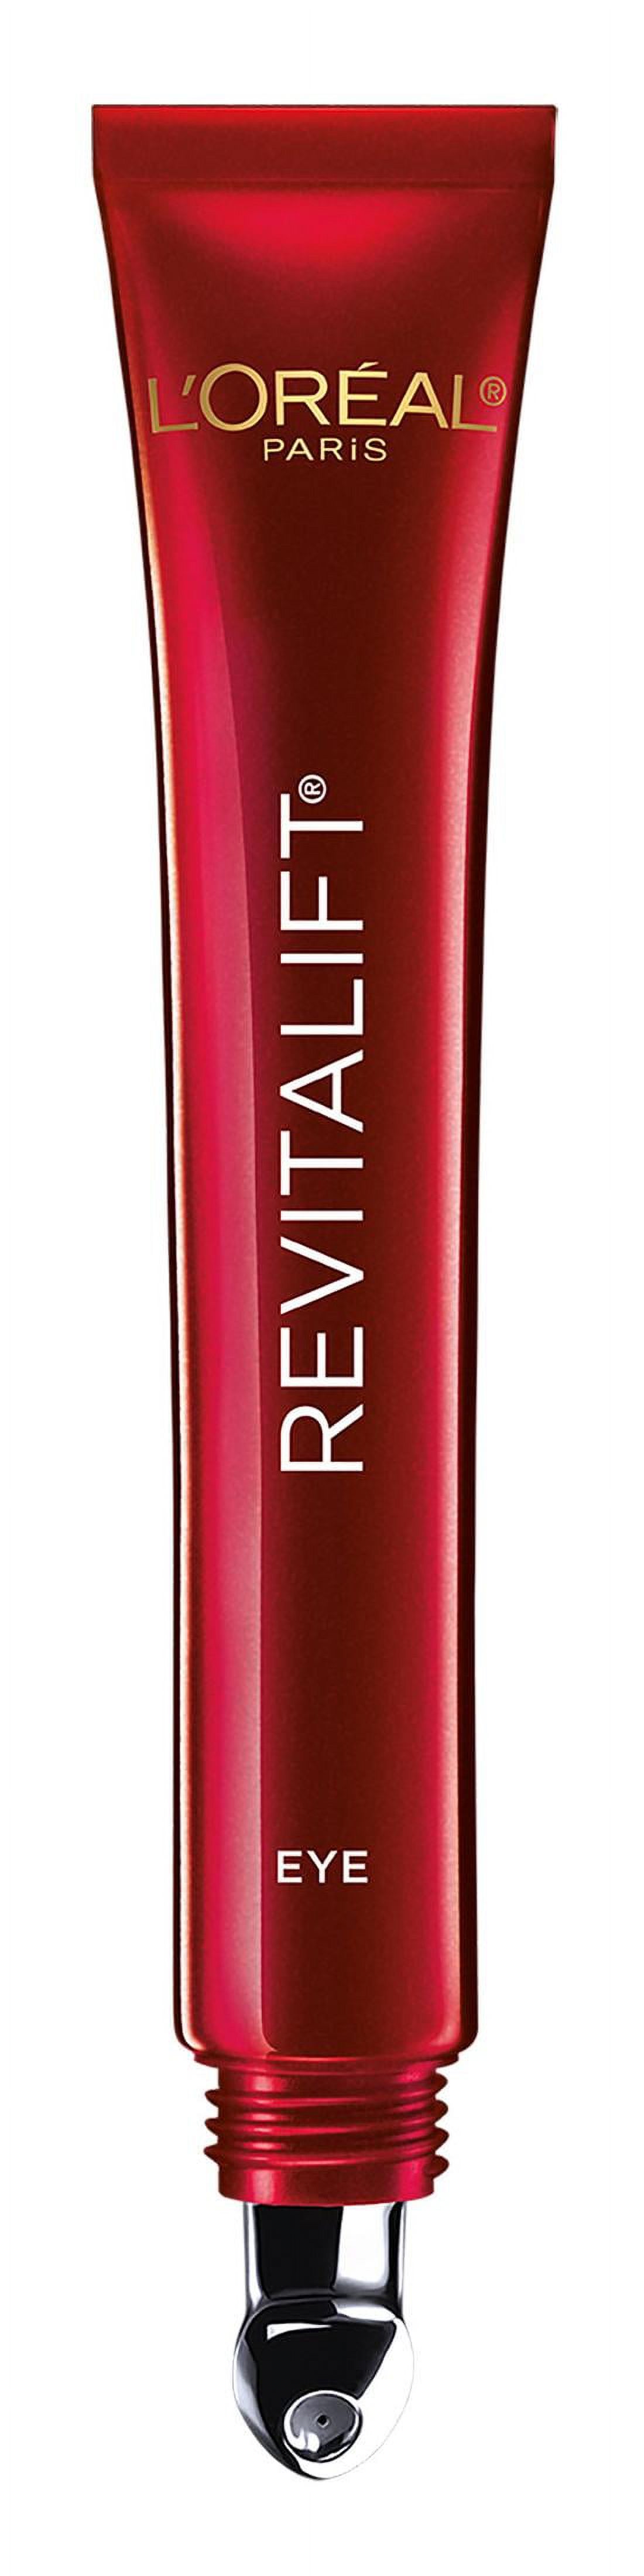 L'Oreal Paris Revitalift Anti Aging Eye Cream 0.5 fl oz - image 1 of 8